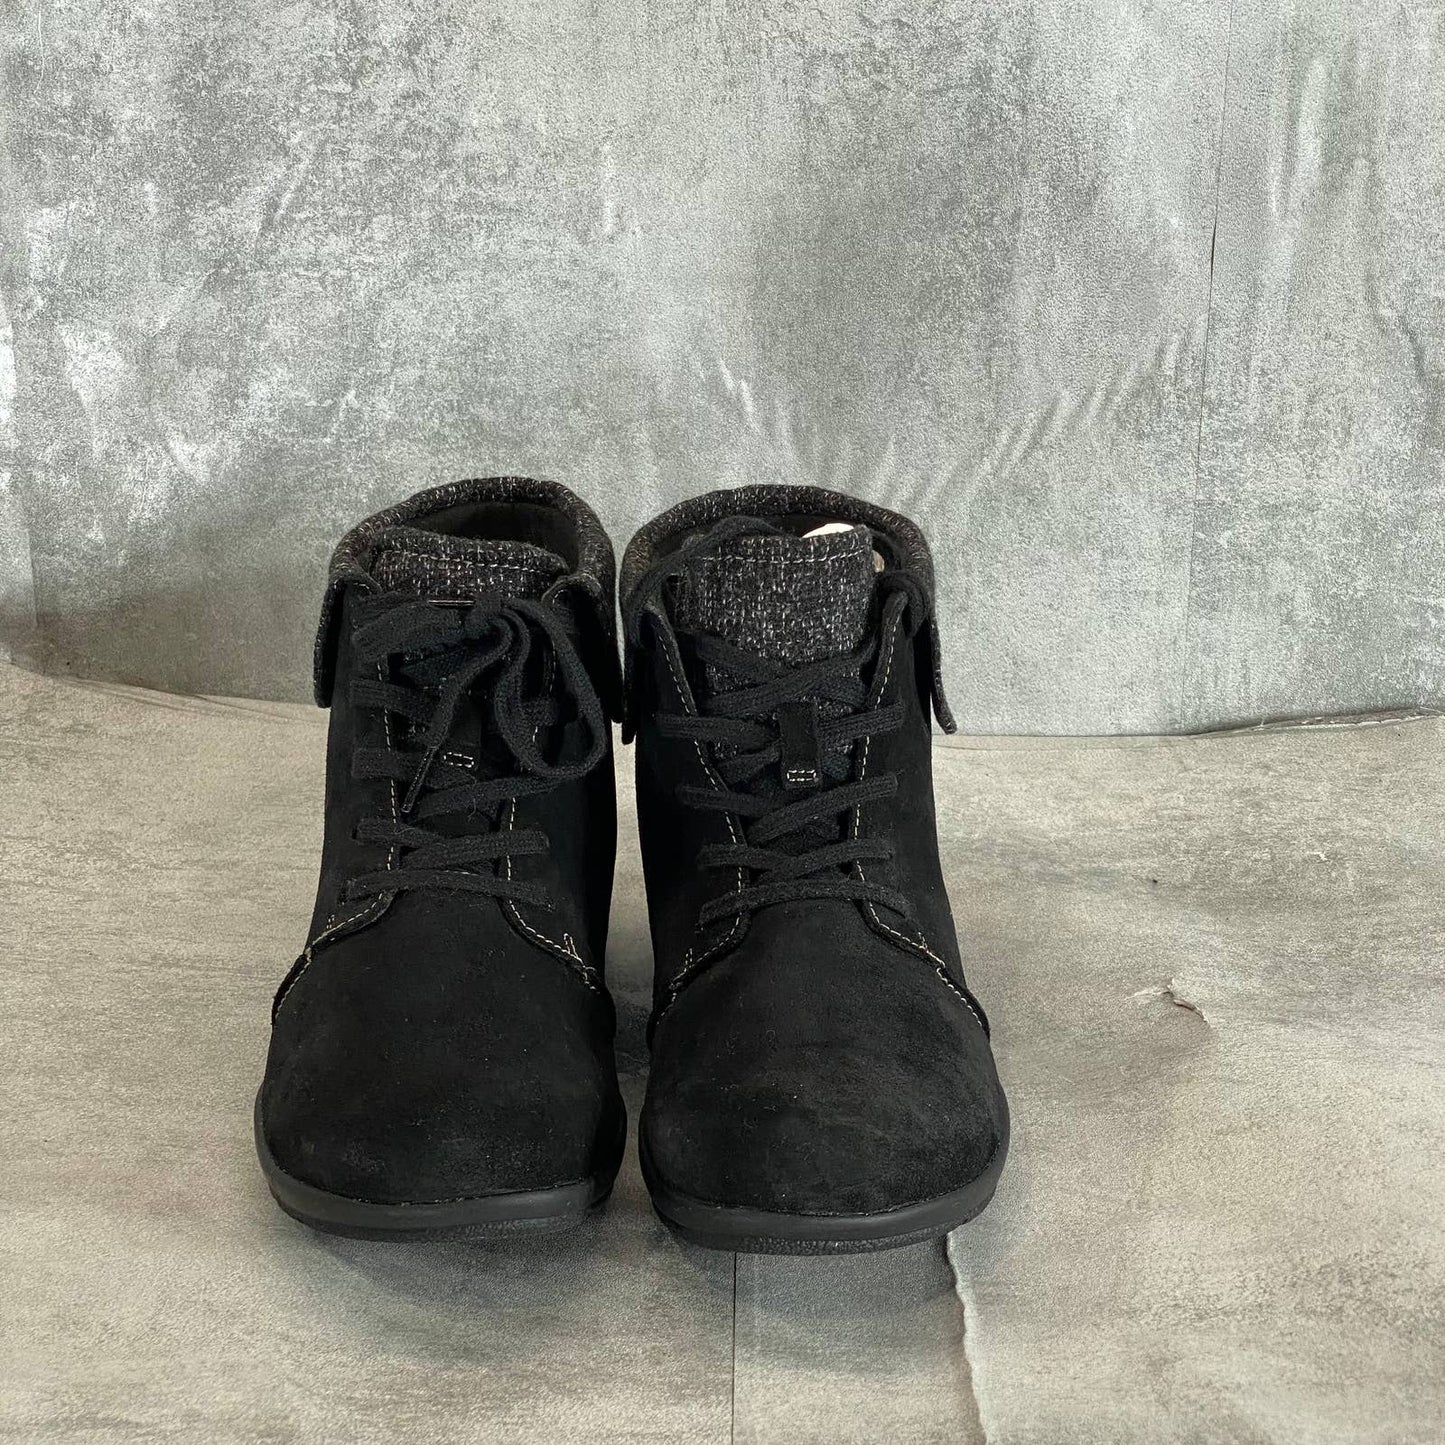 CLARKS Women's Collection Wide Black Suede Roseville Lace Boots SZ 8W